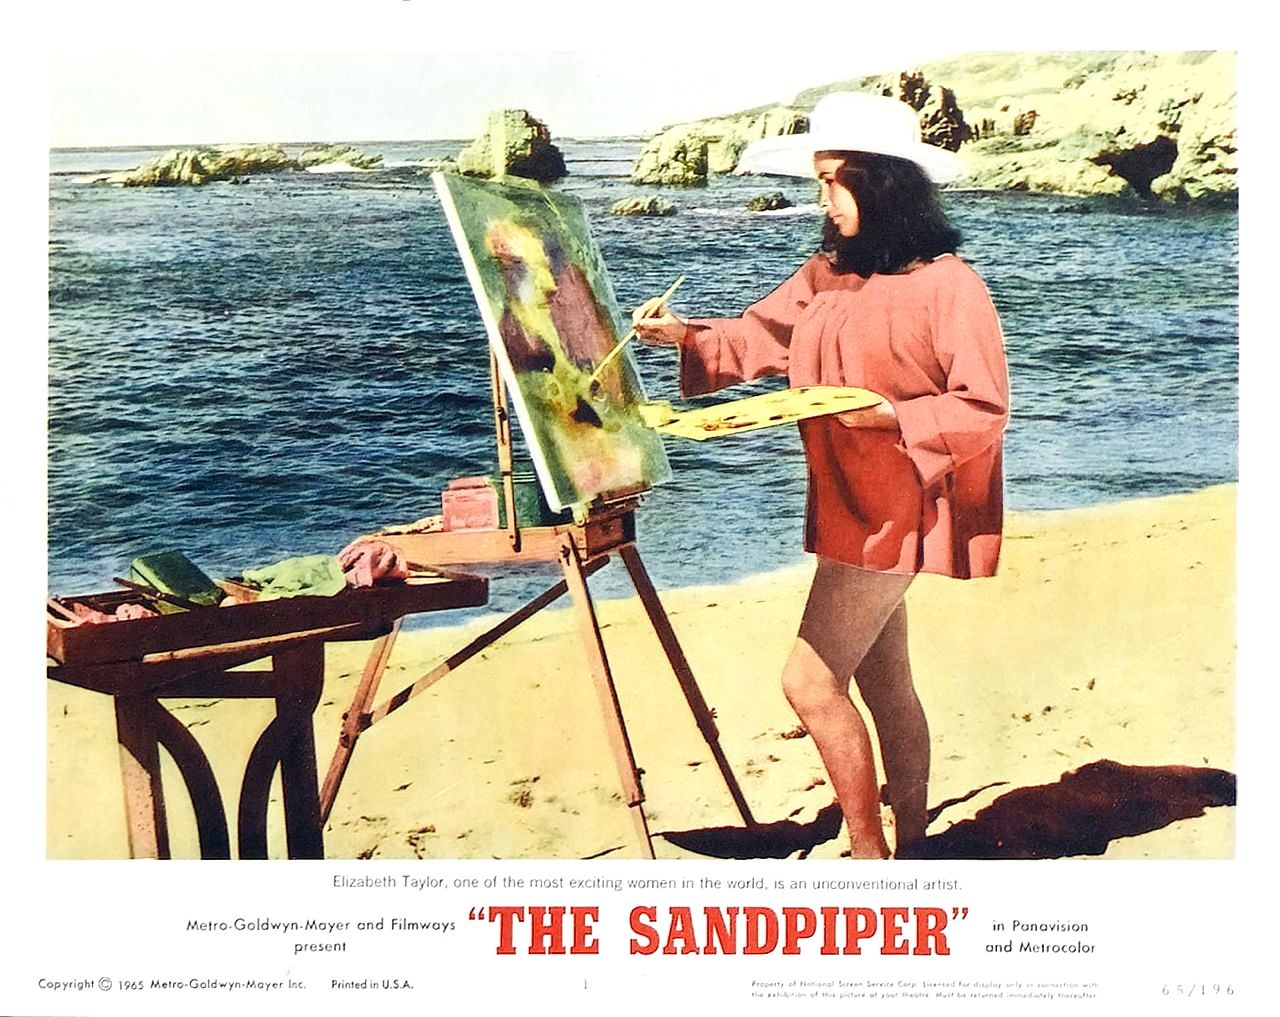 http://2.bp.blogspot.com/-_82xuep9EjY/T7YwbmjL5CI/AAAAAAAA08Y/uHv5XK0Rlek/s1600/elizabeth-taylor-sandpiper-1965-homa-nasab-for-museumviews-3.jpg